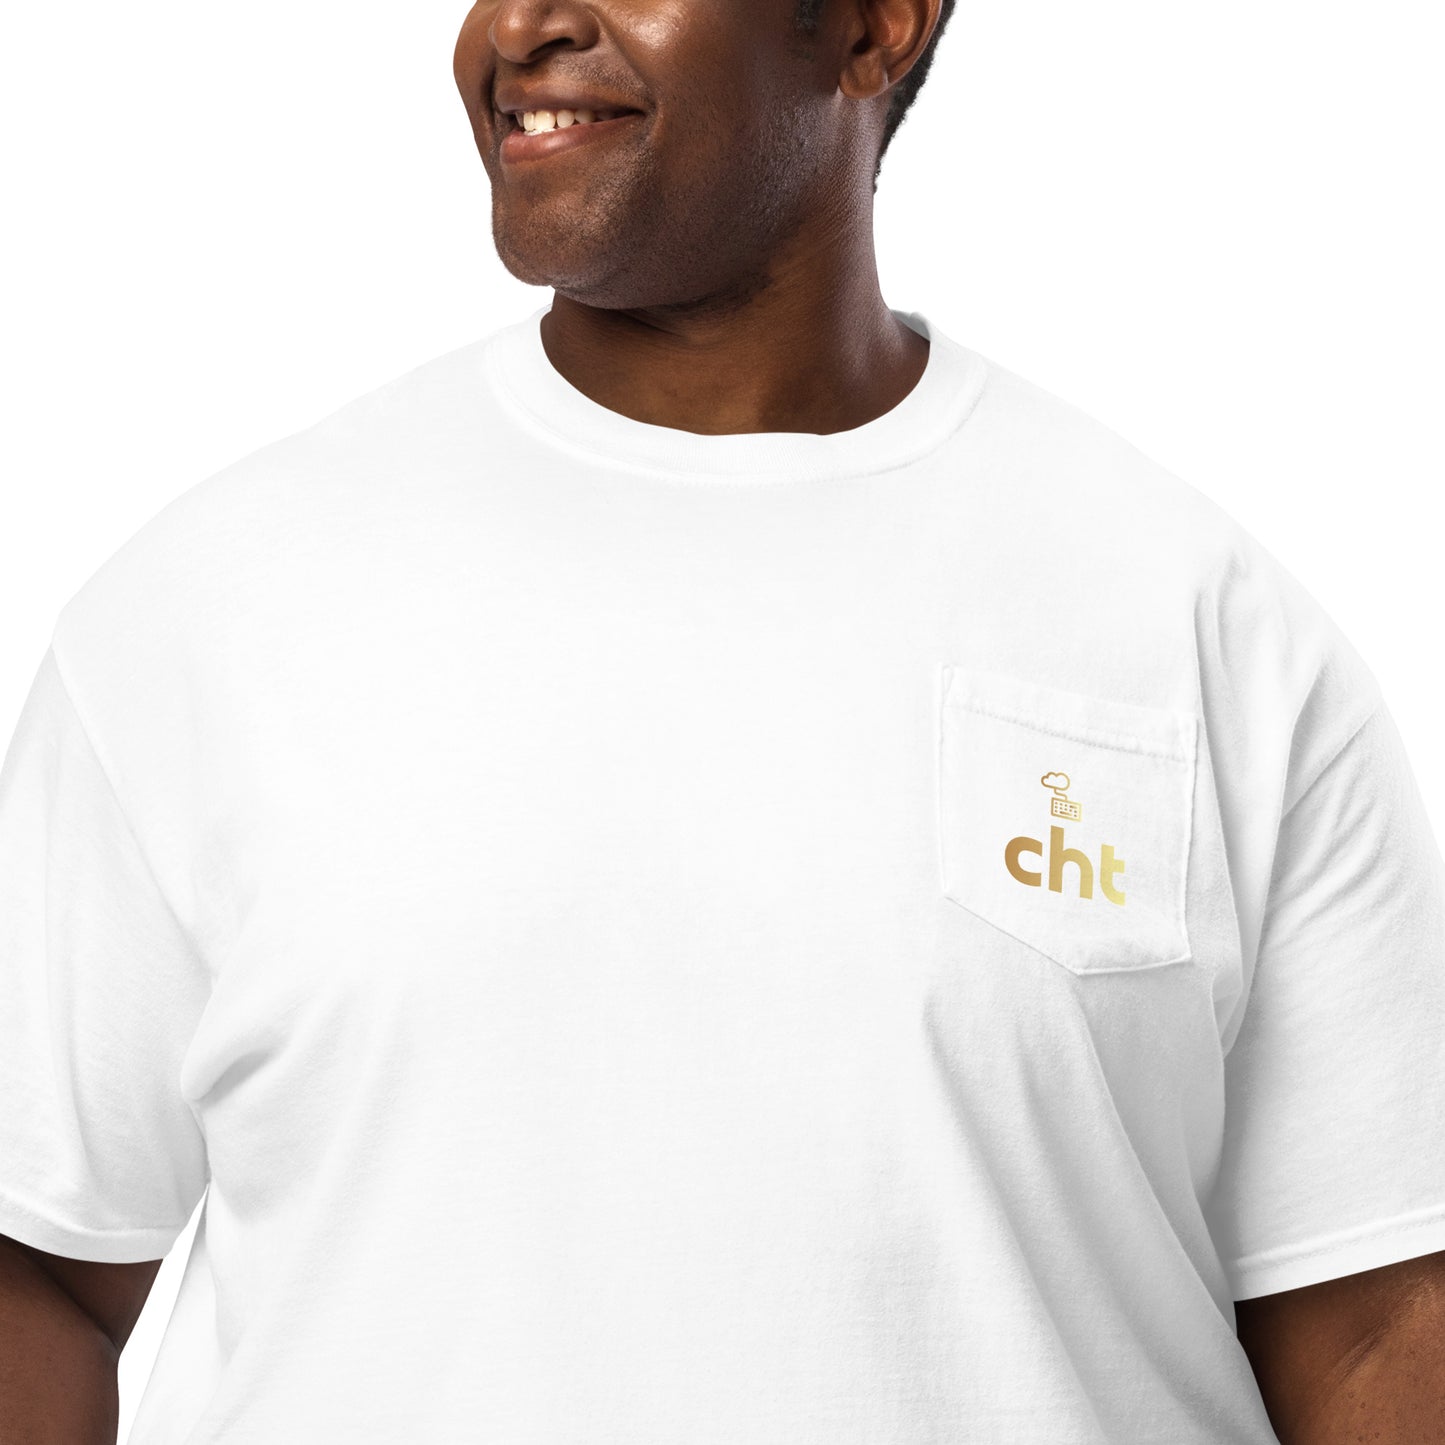 Unisex CHT Pocket T-shirt